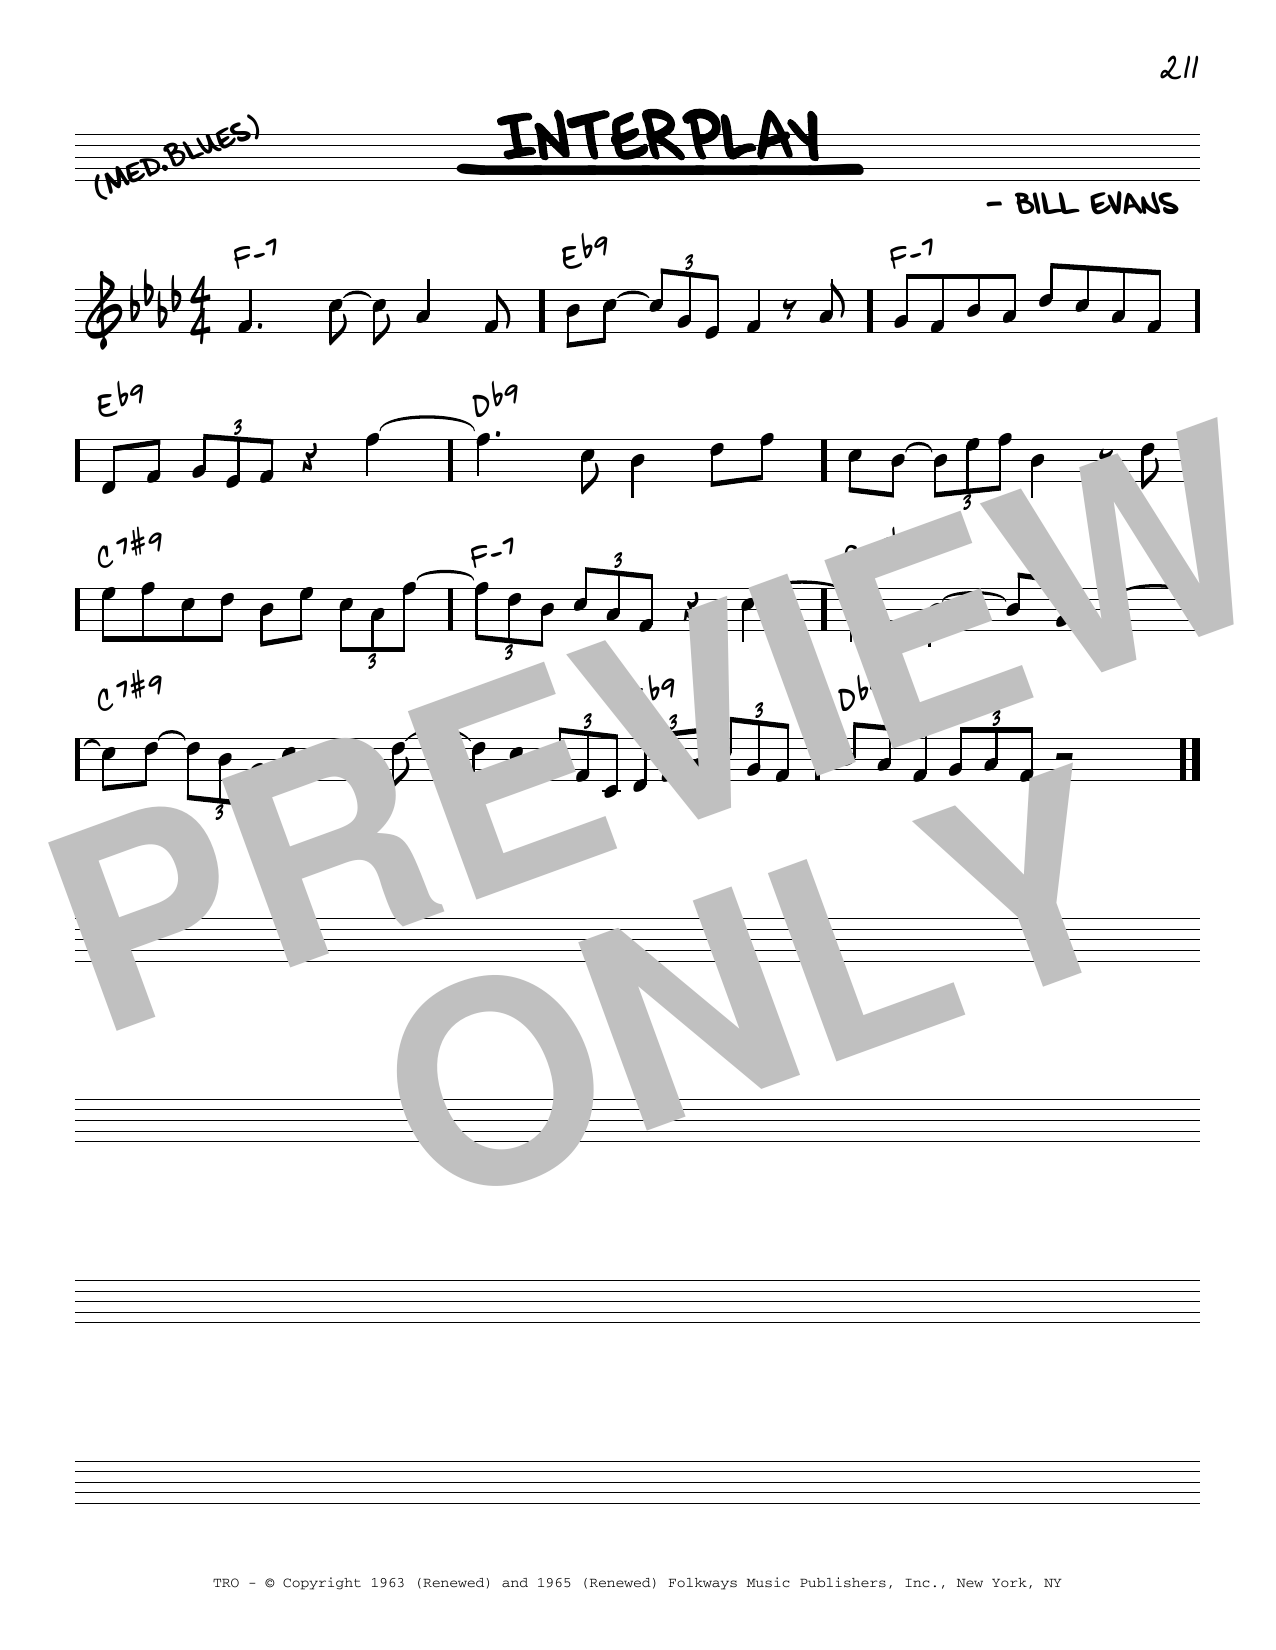 Download Bill Evans Interplay [Reharmonized version] (arr. Sheet Music